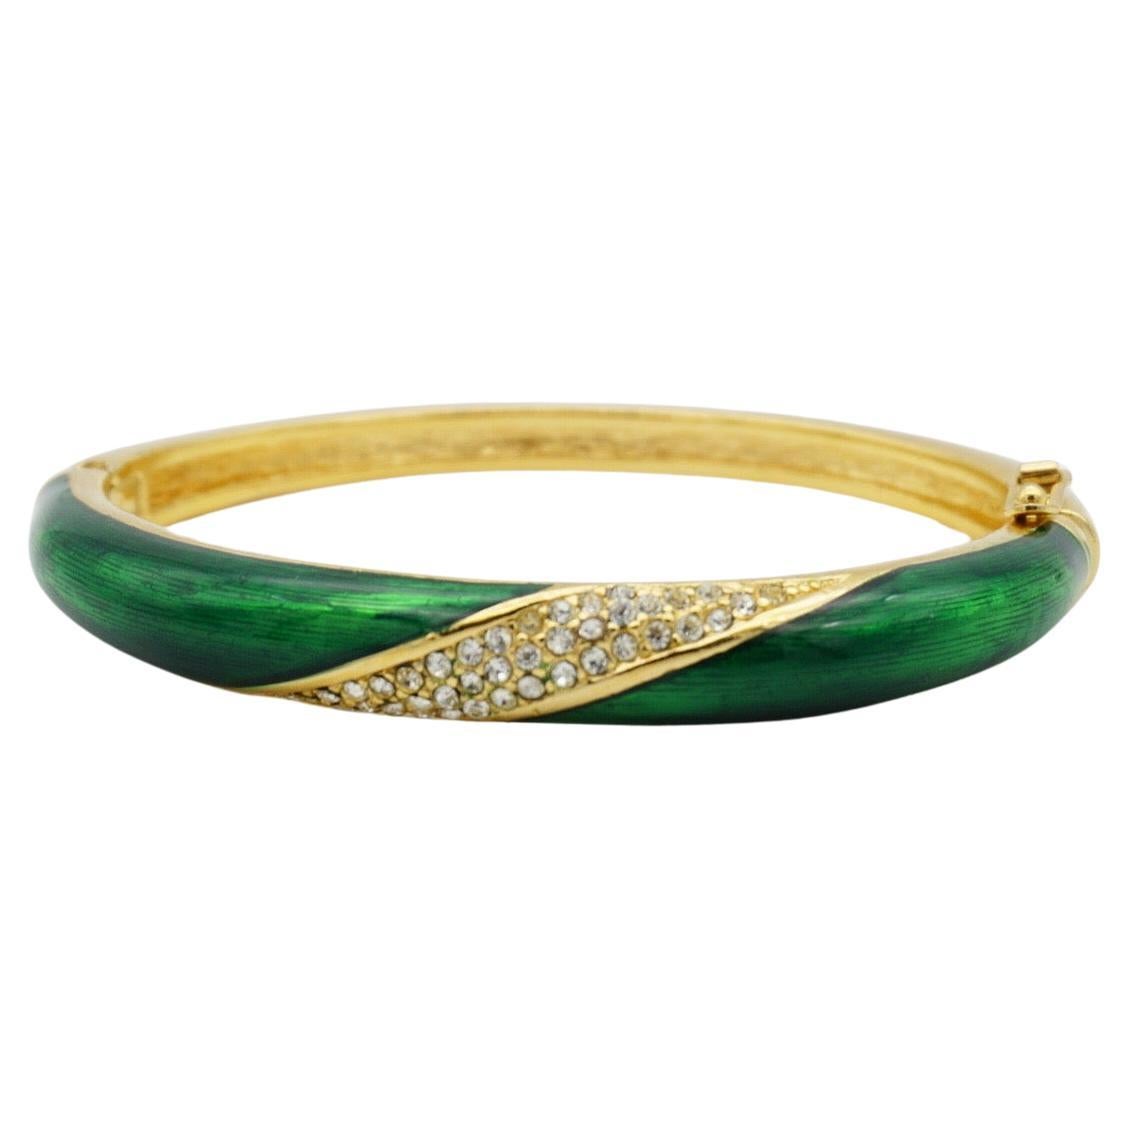 Christian Dior 1980s Vintage Emerald Green Enamel Crystals Cuff Bangle Bracelet